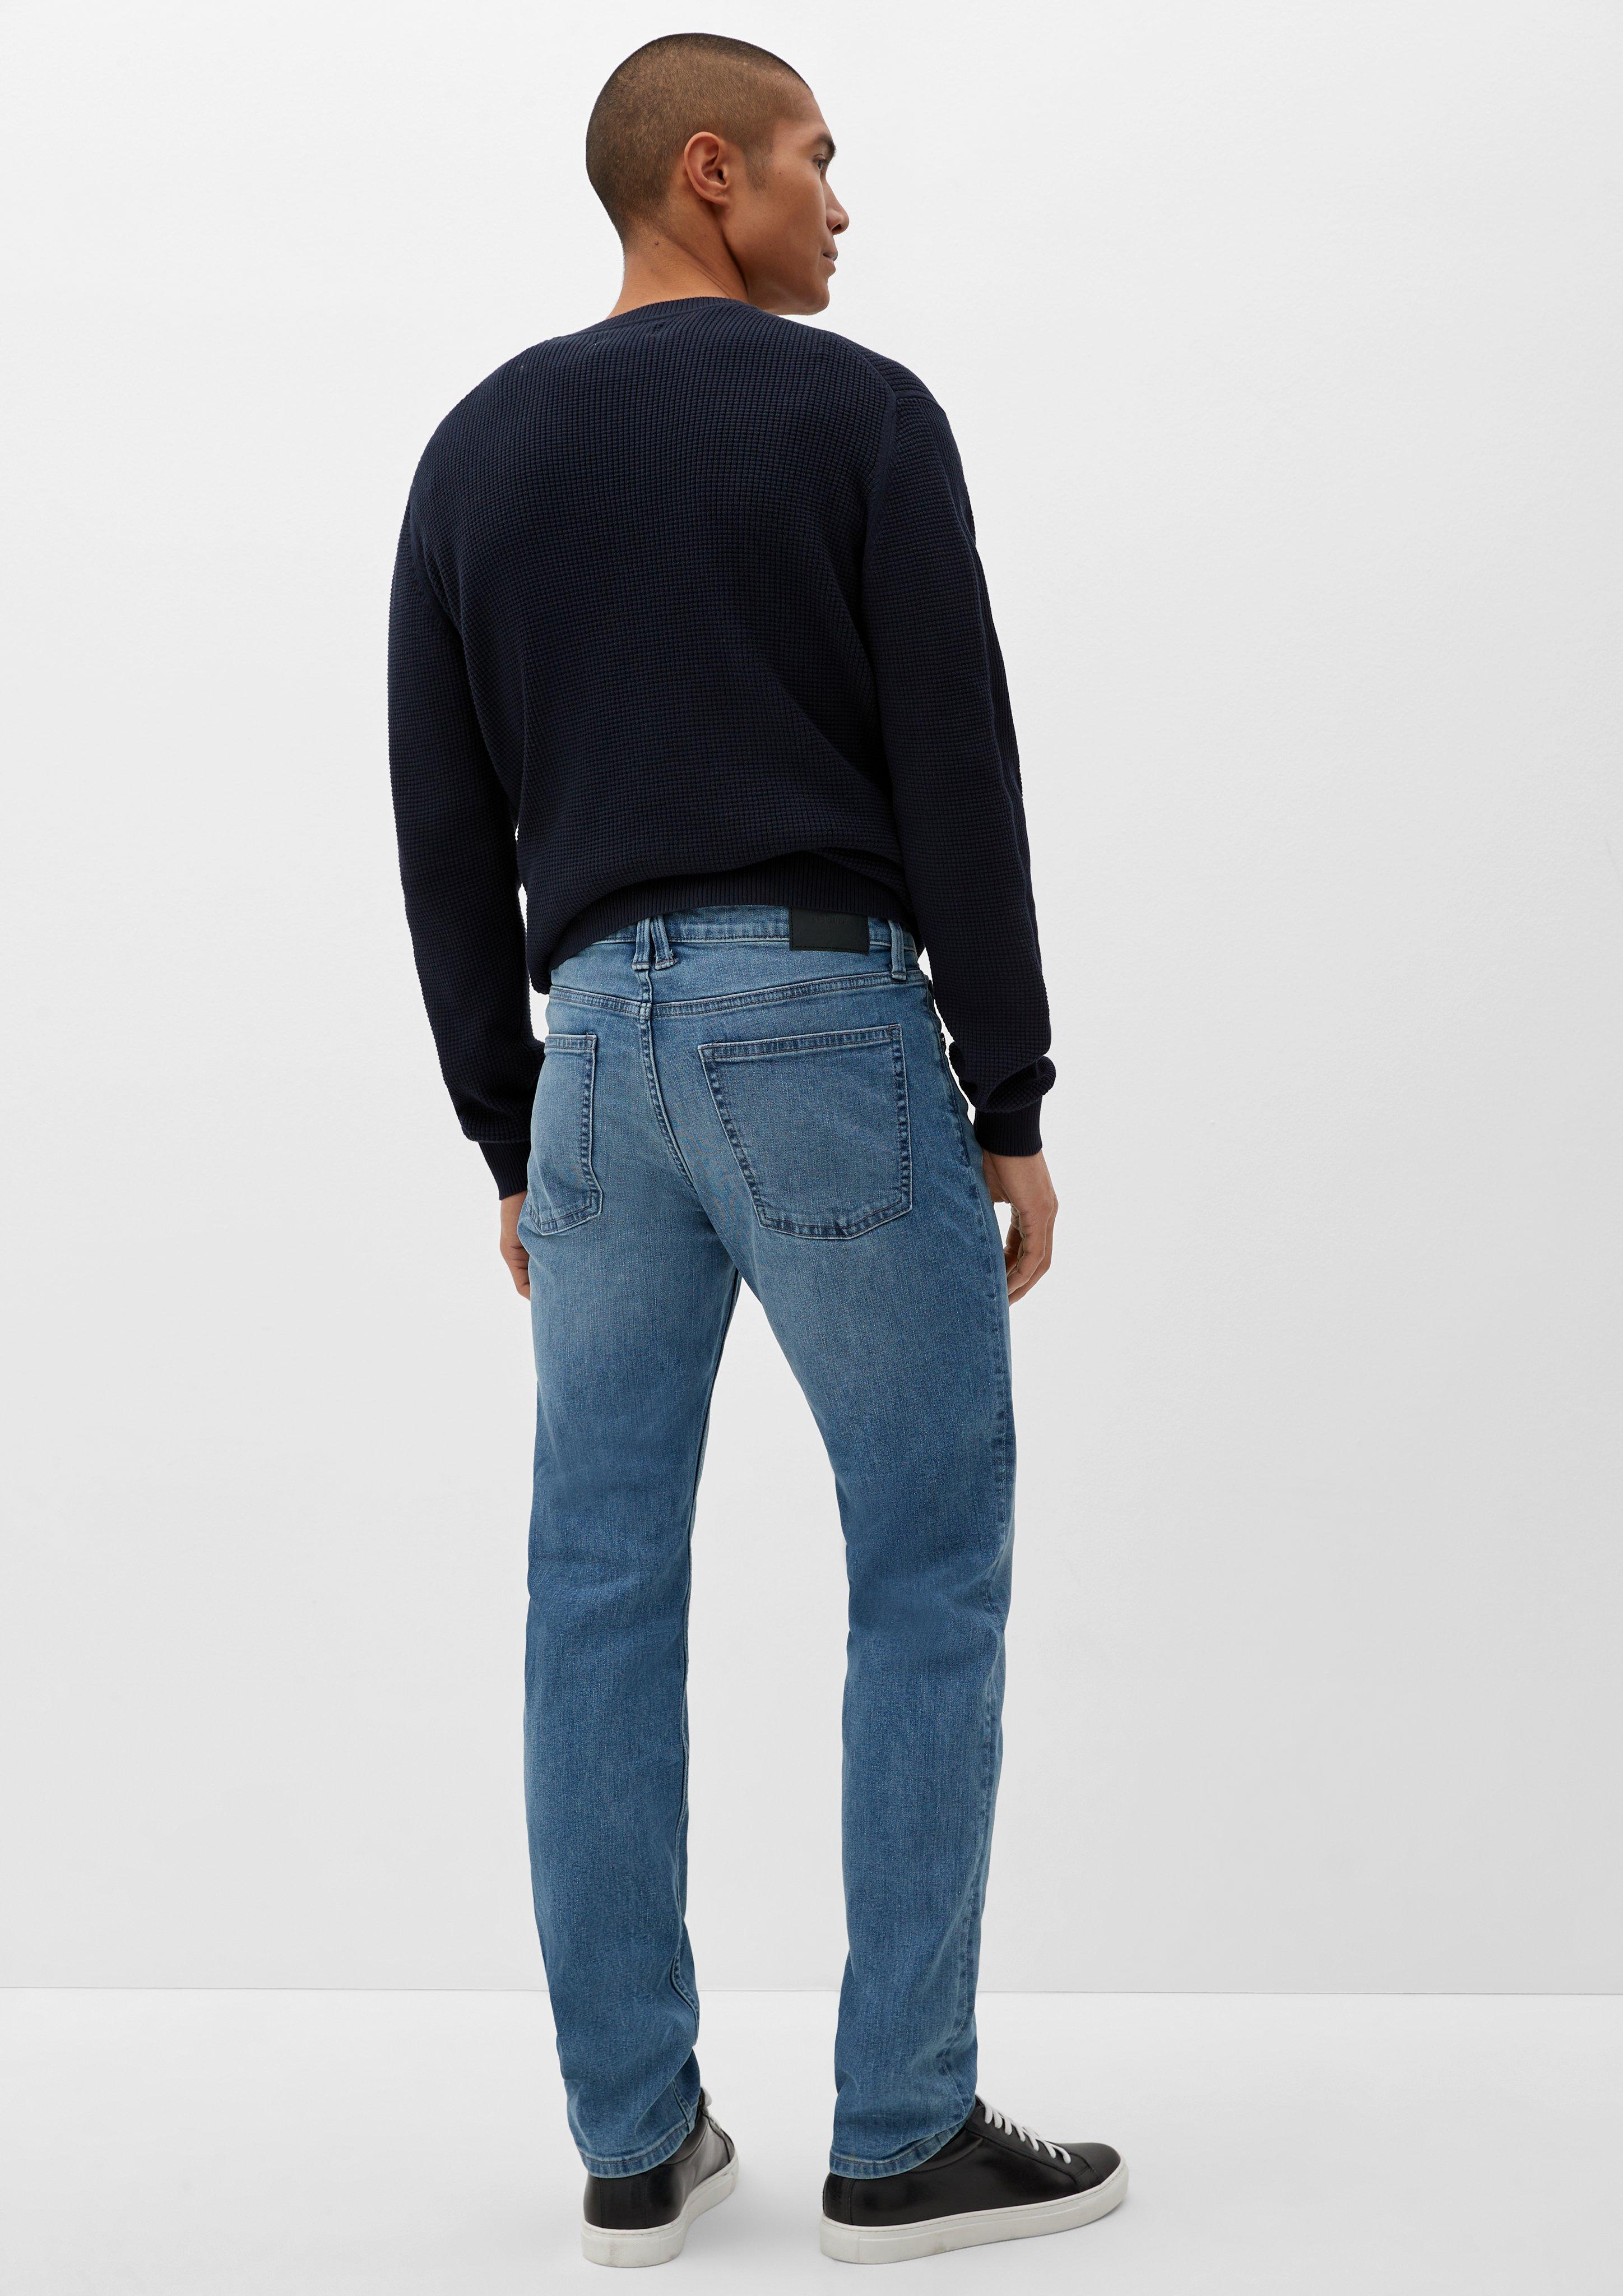 Denim trousers - light blue | s.Oliver